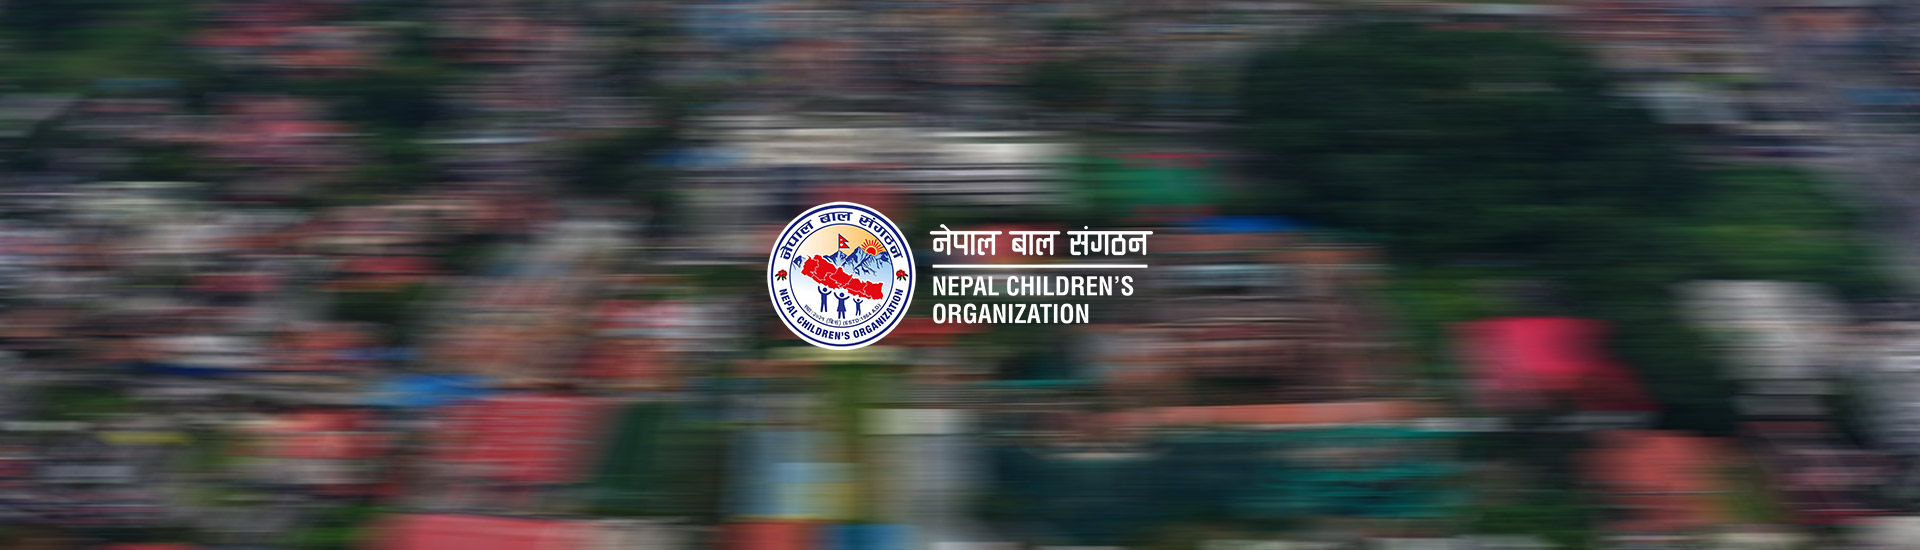 Nepal Children’s Organization (NCO)